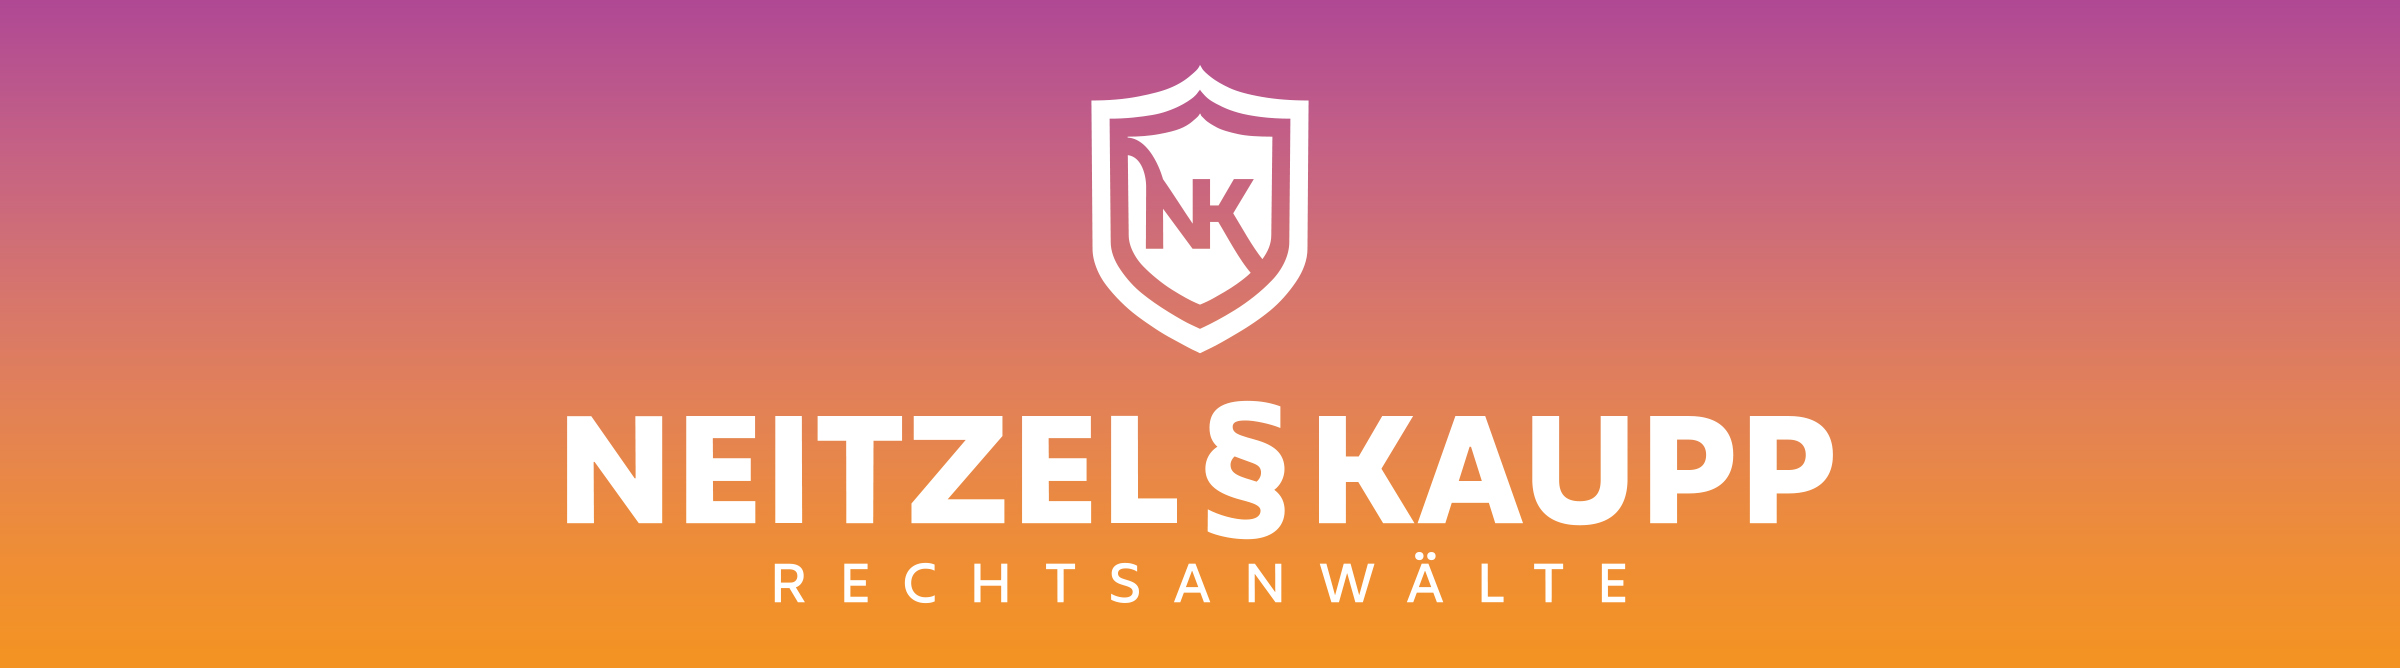 Neitzel § Kaupp Banner mit Wappen